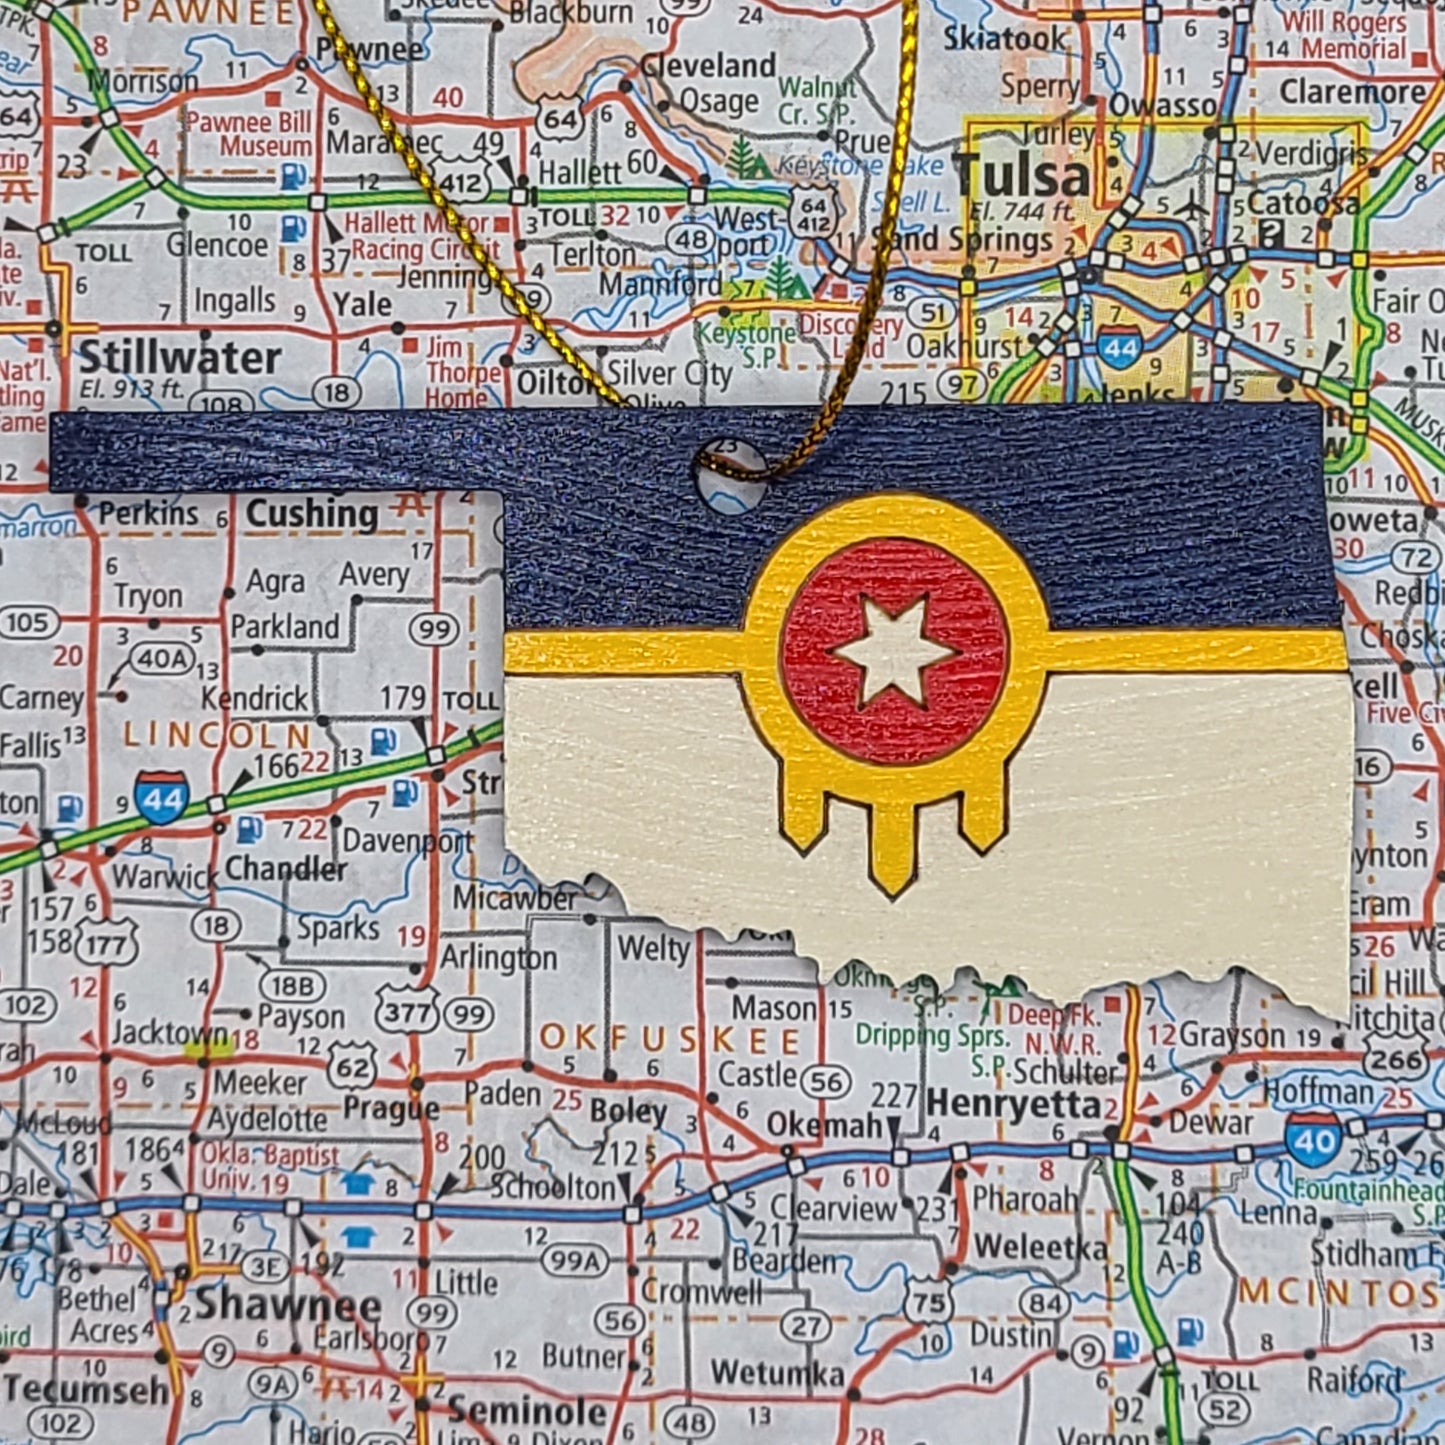 Oklahoma (Tulsa Flag) ornament